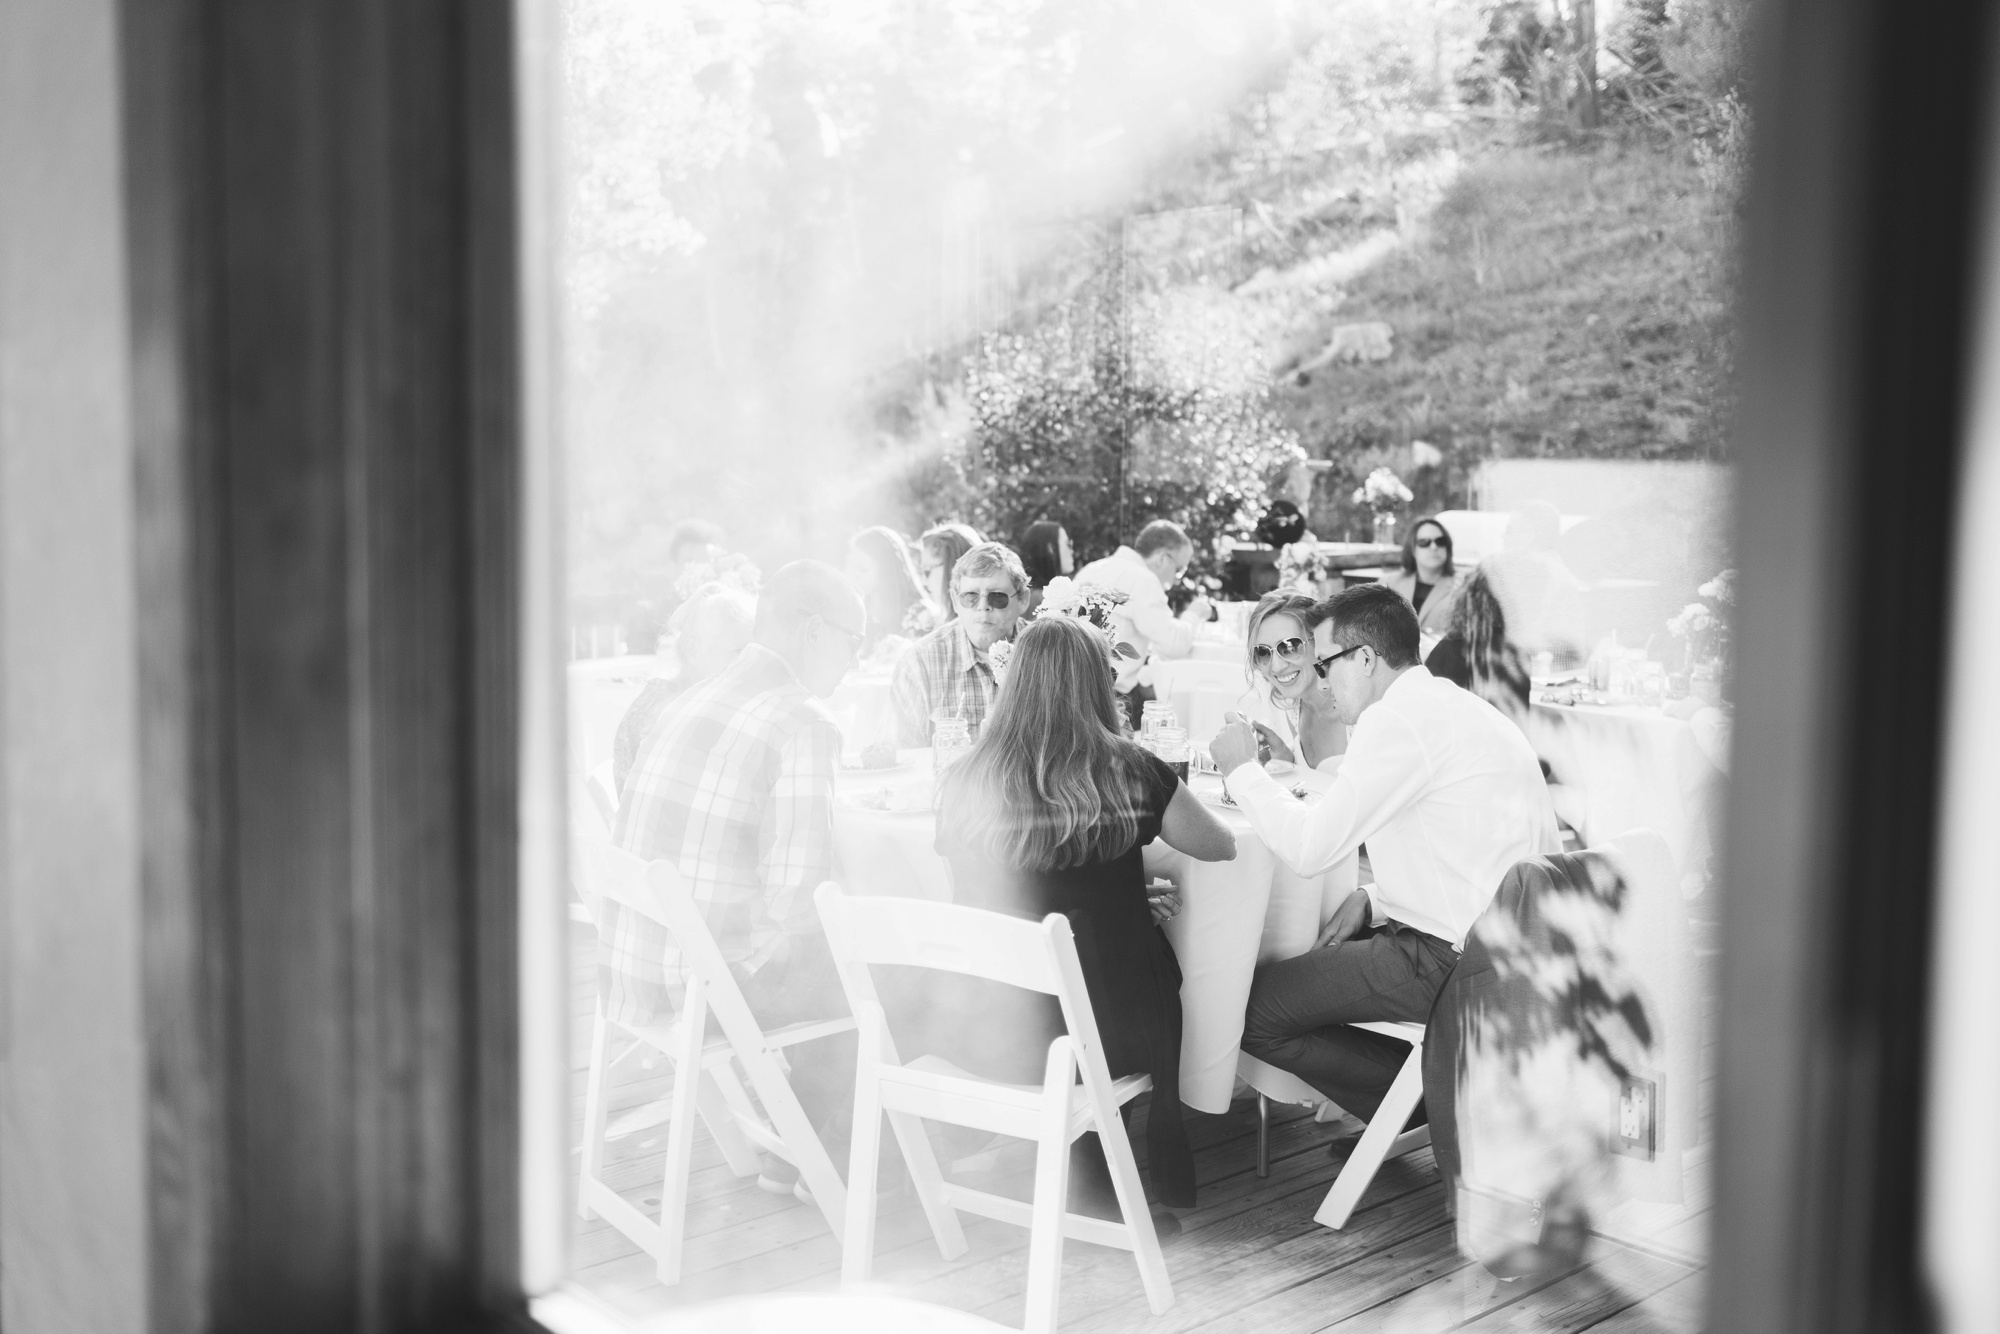 Outdoor reception ideas by destination wedding photographer Rebecca Cerasani.